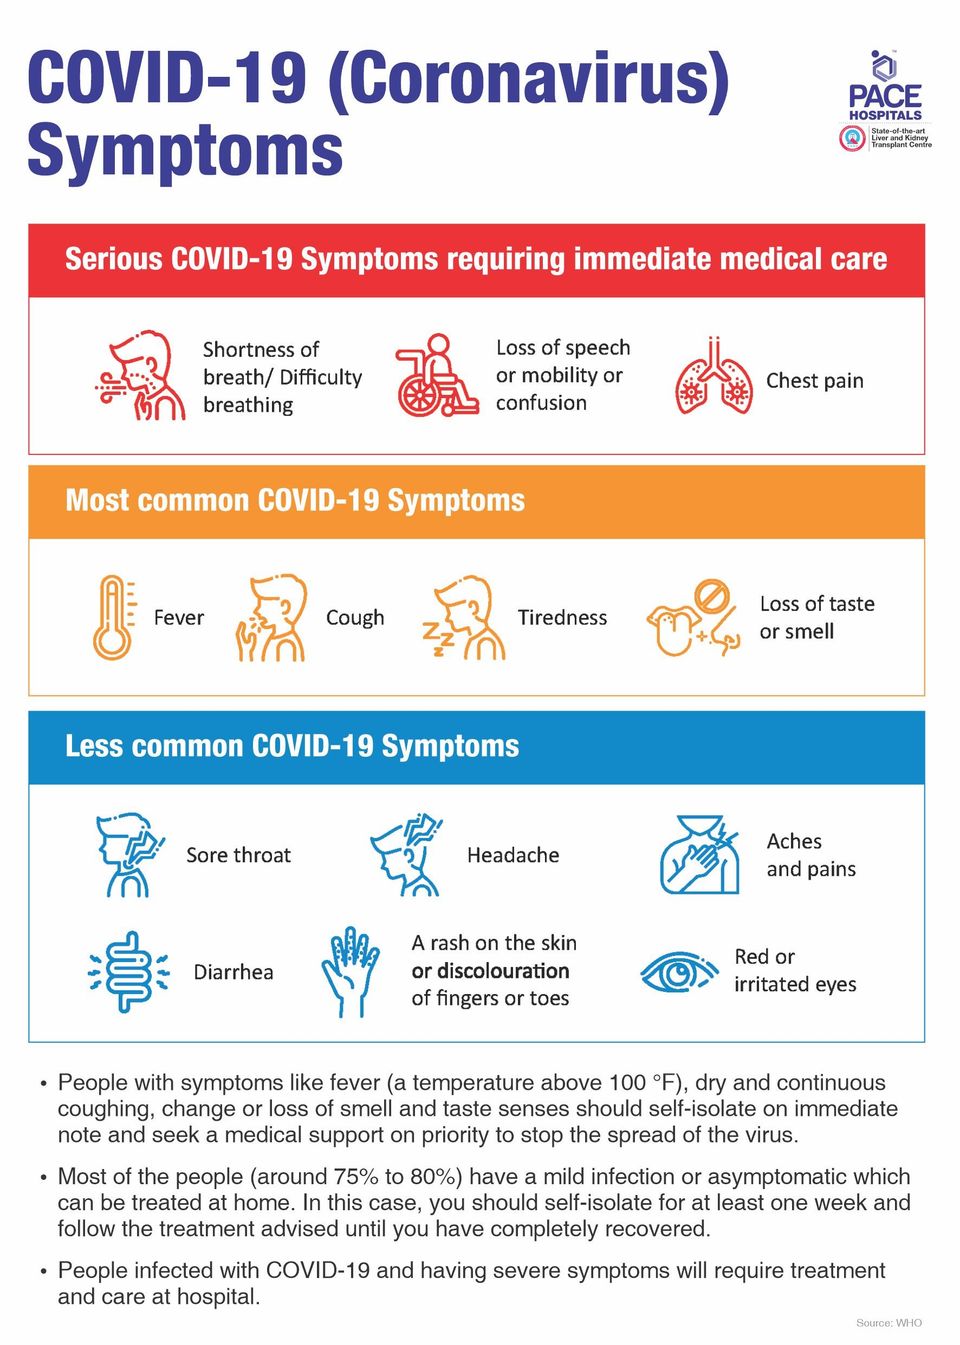 Coronavirus Symptoms, Precautions and Treatment